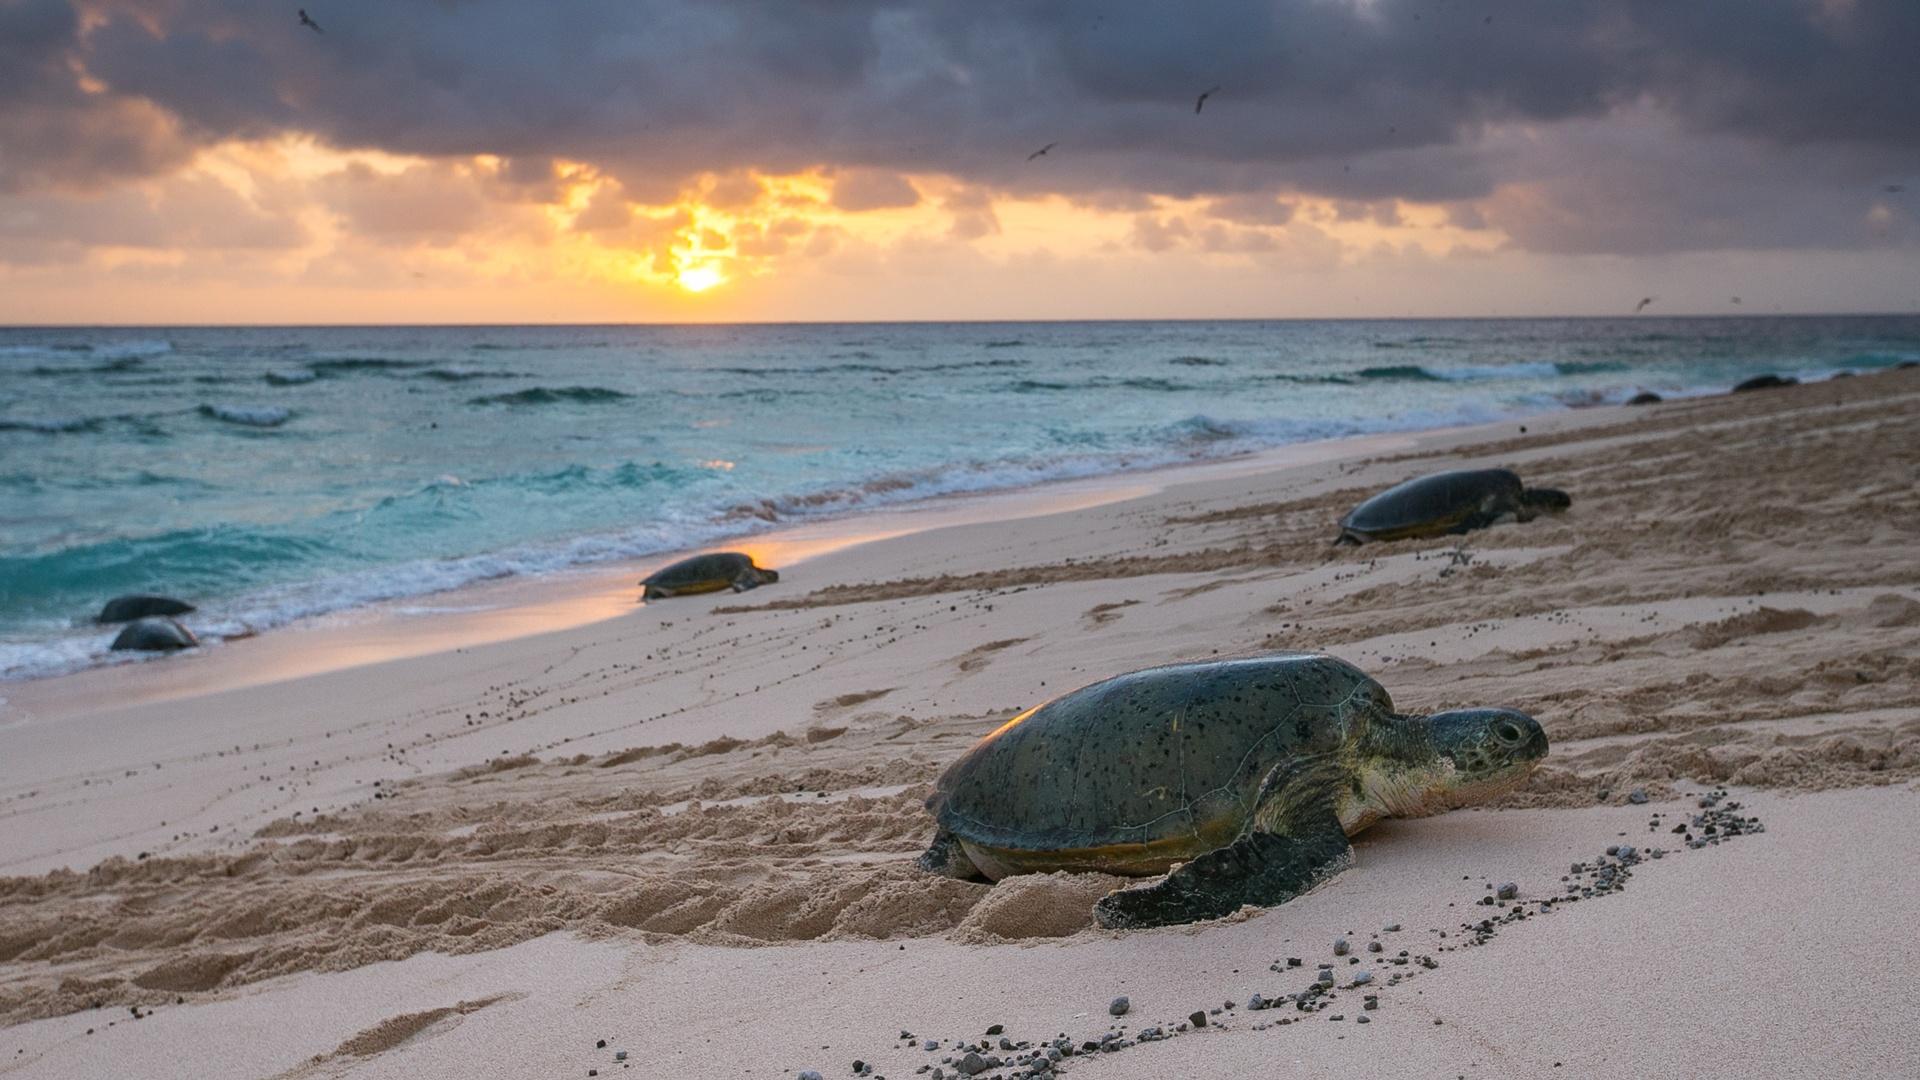 Green sea turtles climb up the beach of Raine Island to lay their eggs.